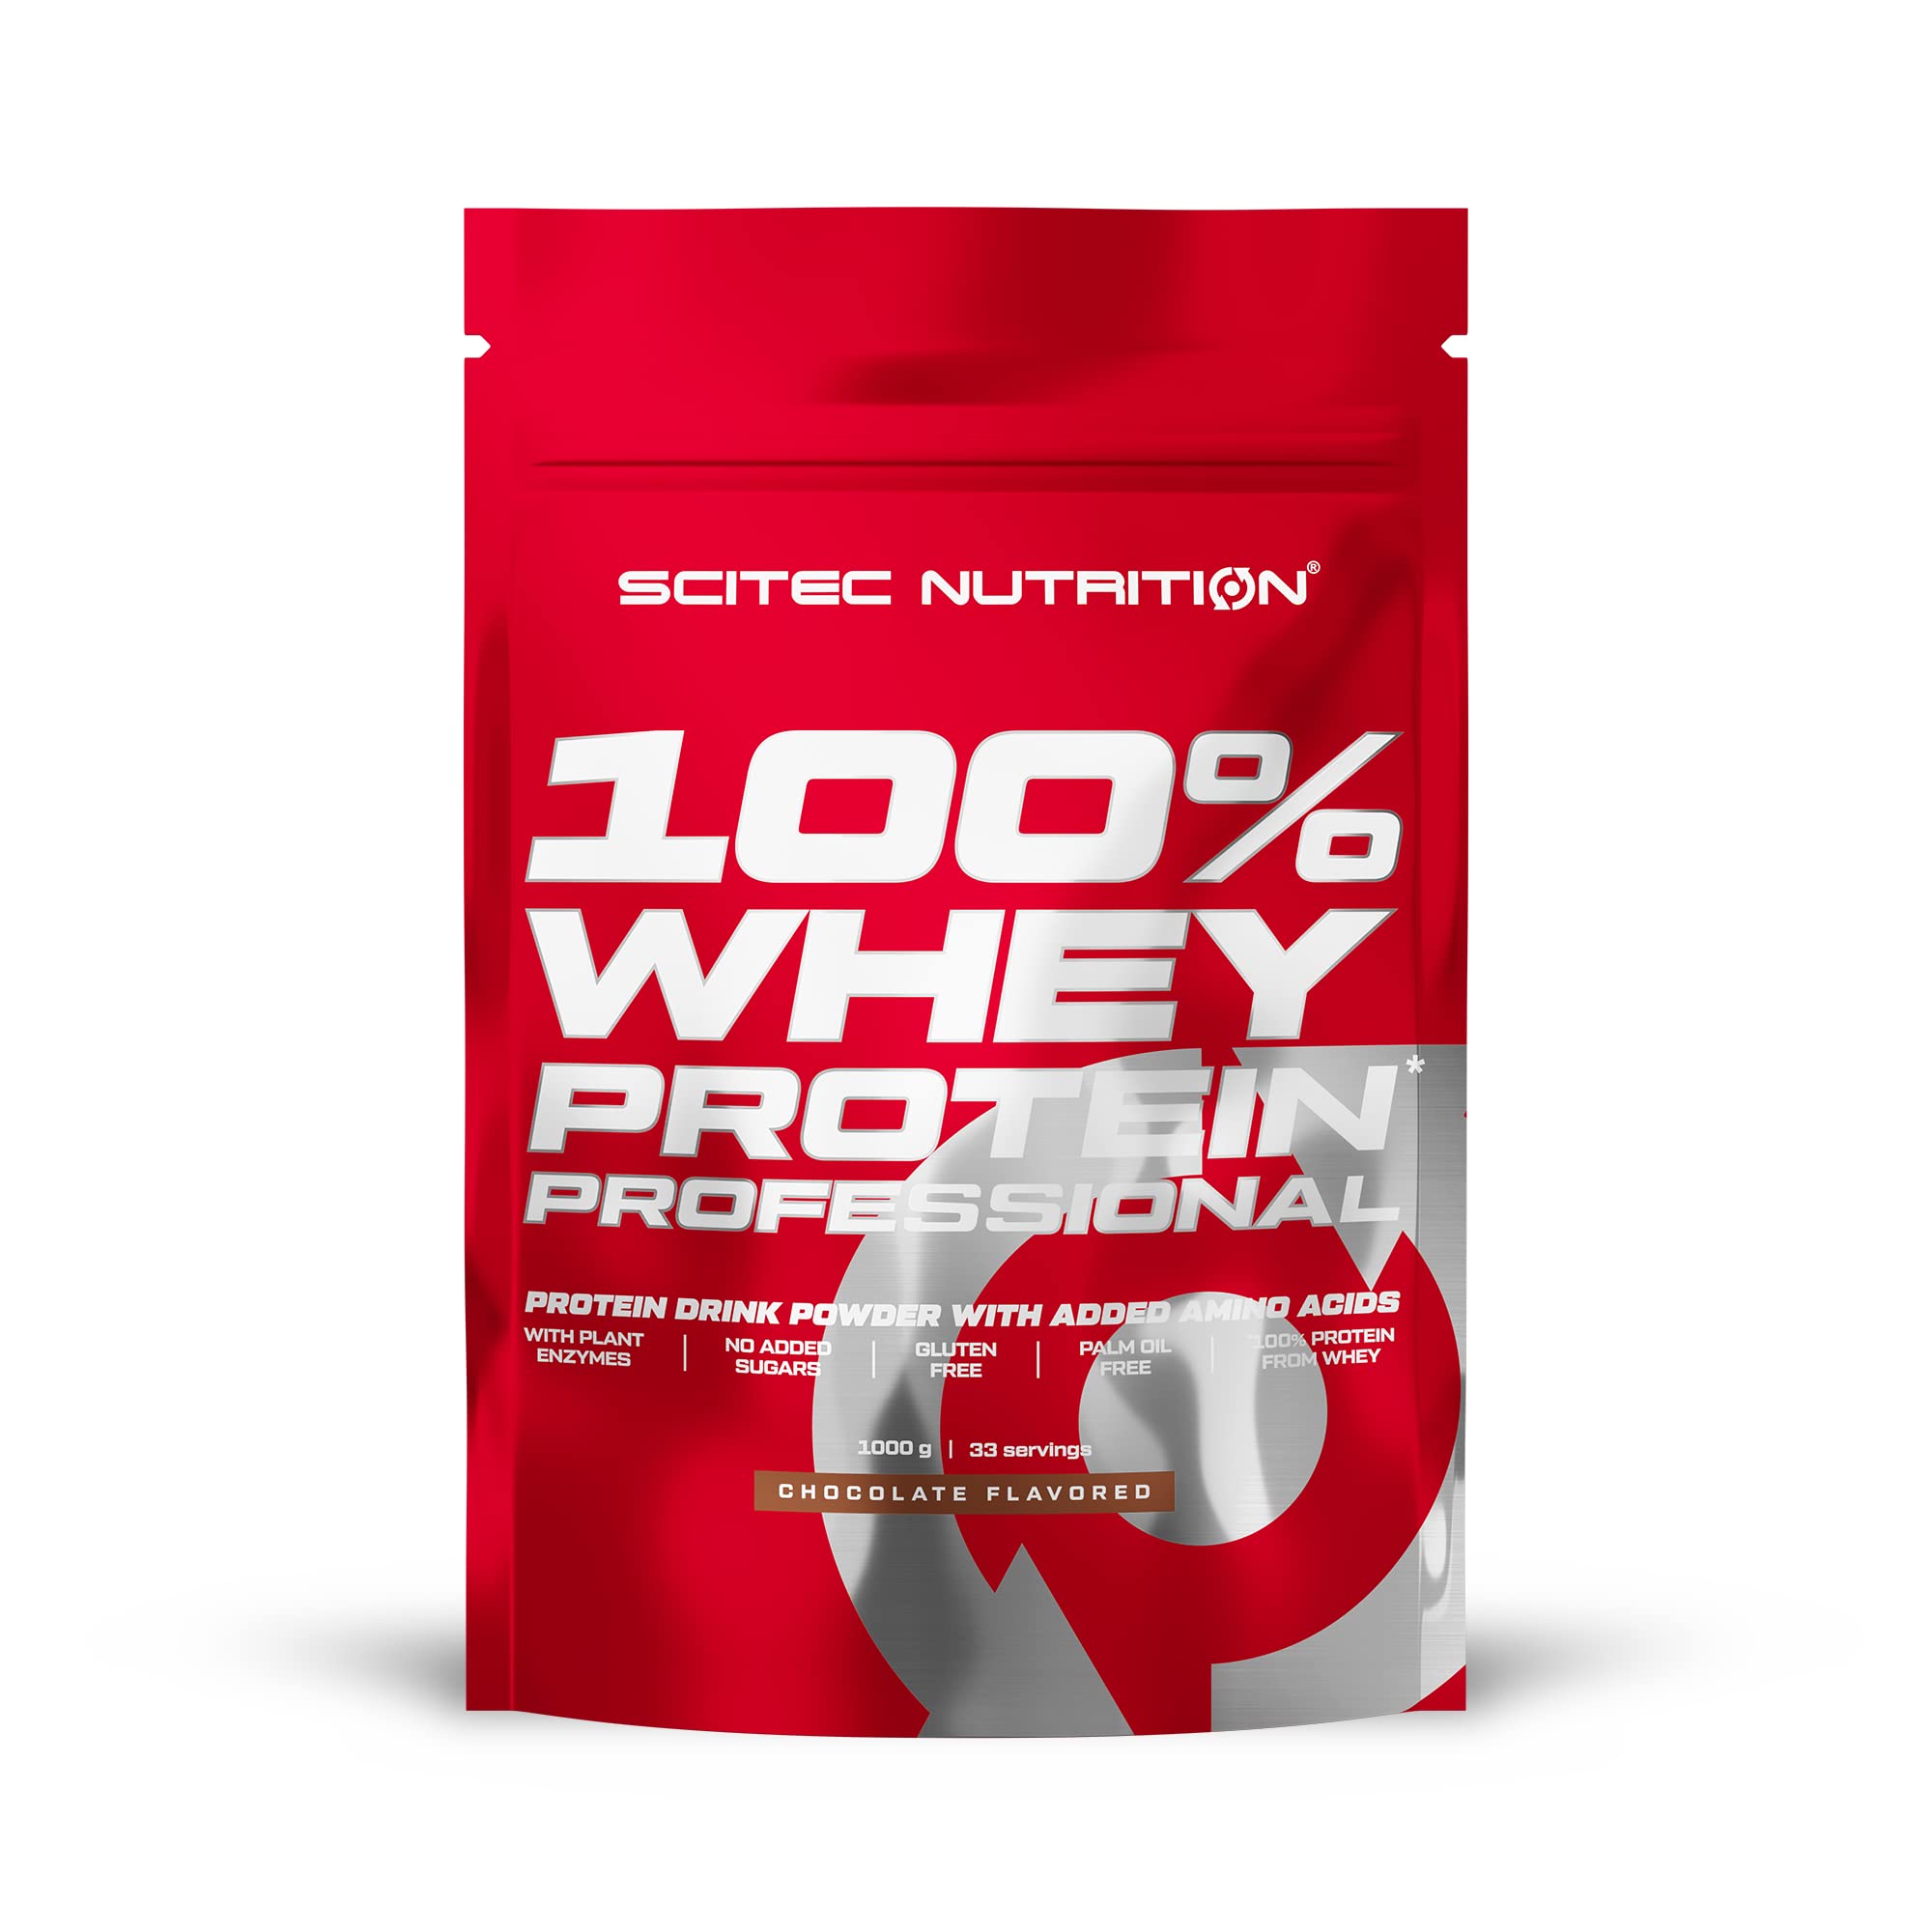 Photos - Protein Scitec Nutrition SciTec 100 Whey  Professional 1kg, Chocolate Hazelnut PBW-P45521 